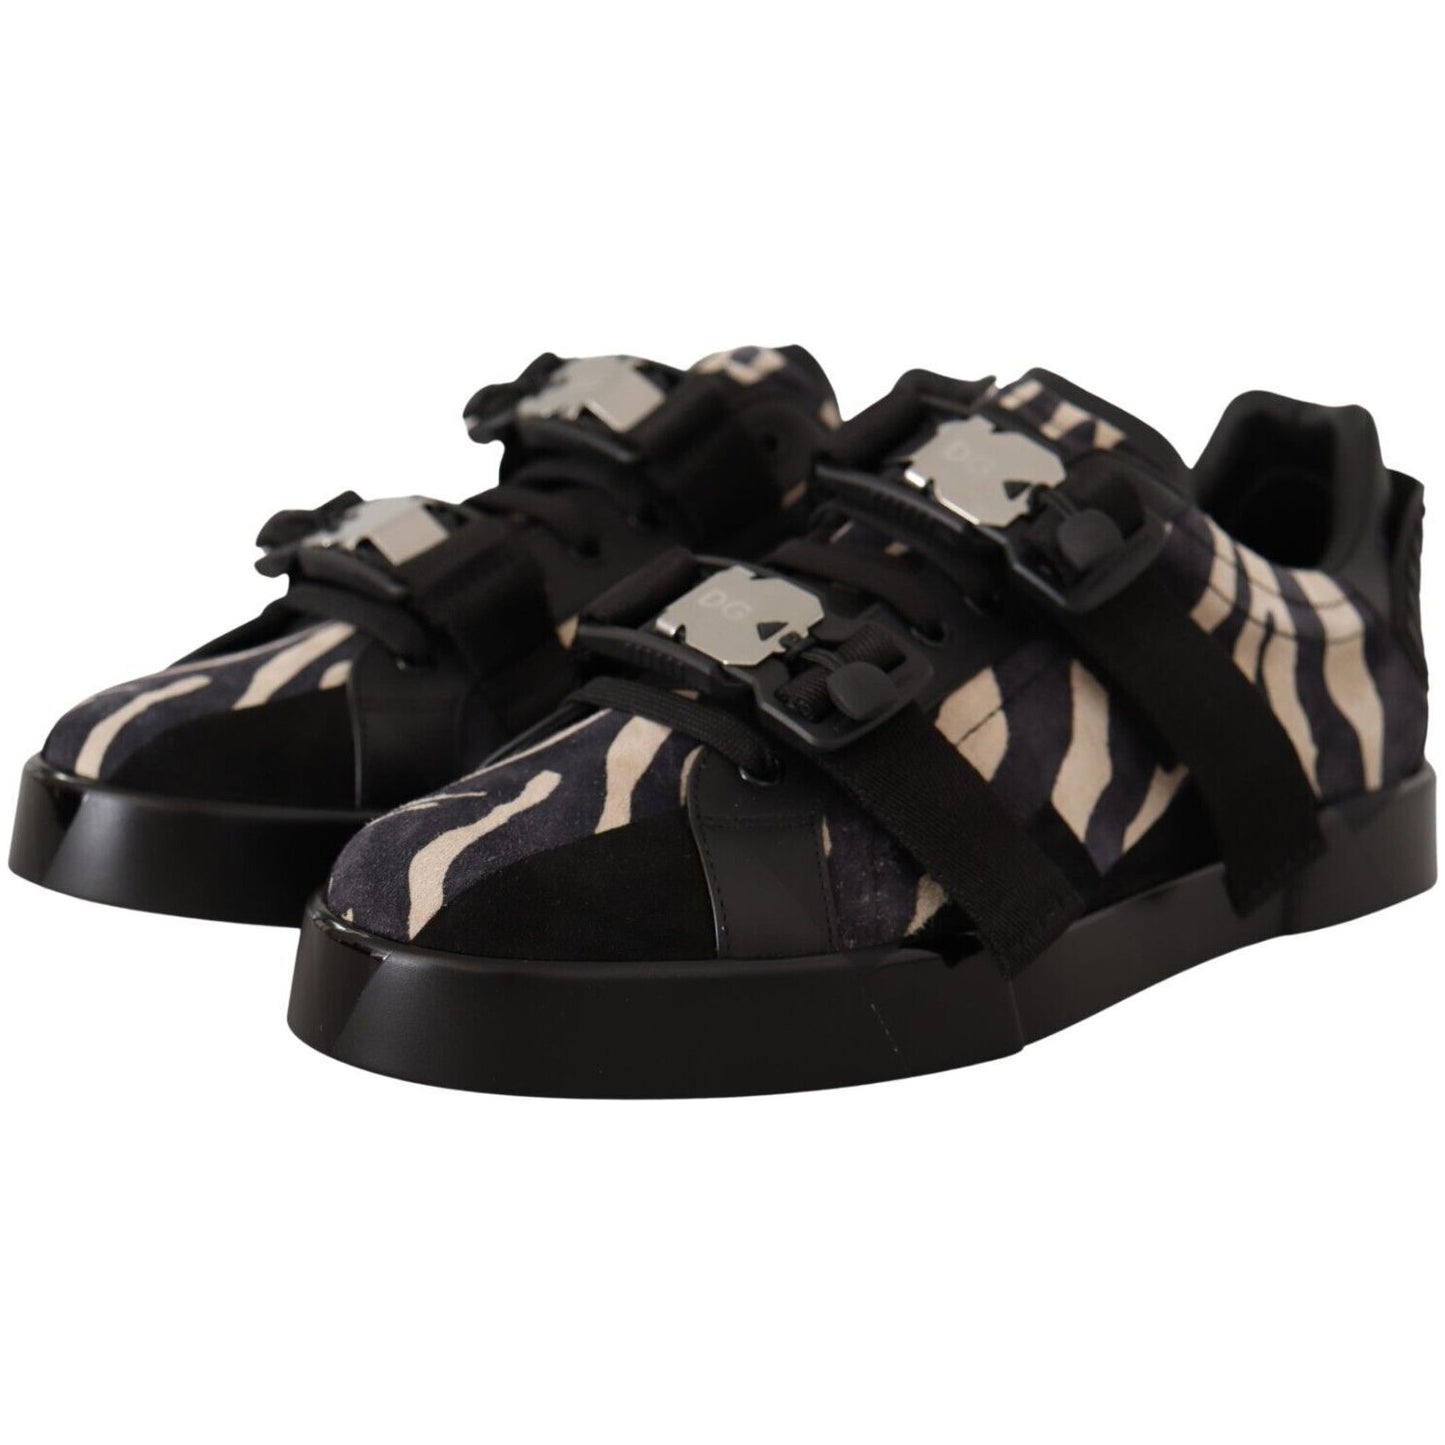 Dolce & Gabbana Zebra Suede Low Top Fashion Sneakers MAN SNEAKERS black-white-zebra-suede-rubber-sneakers-shoes-2 s-l1600-7-5-98871ee2-1dd.jpg